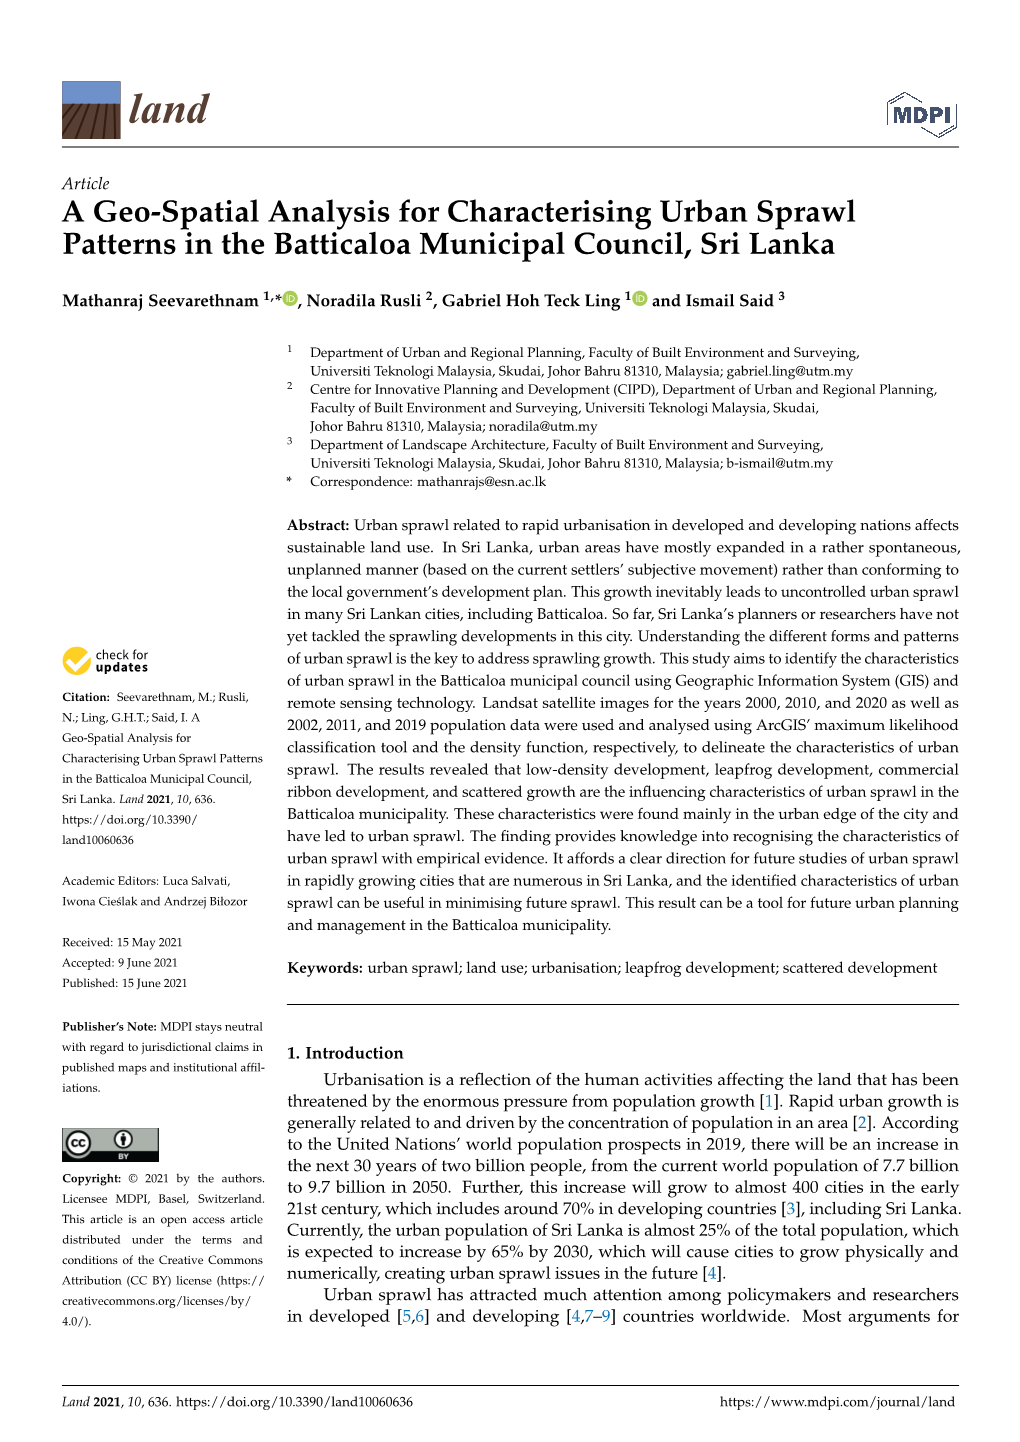 A Geo-Spatial Analysis for Characterising Urban Sprawl Patterns in the Batticaloa Municipal Council, Sri Lanka